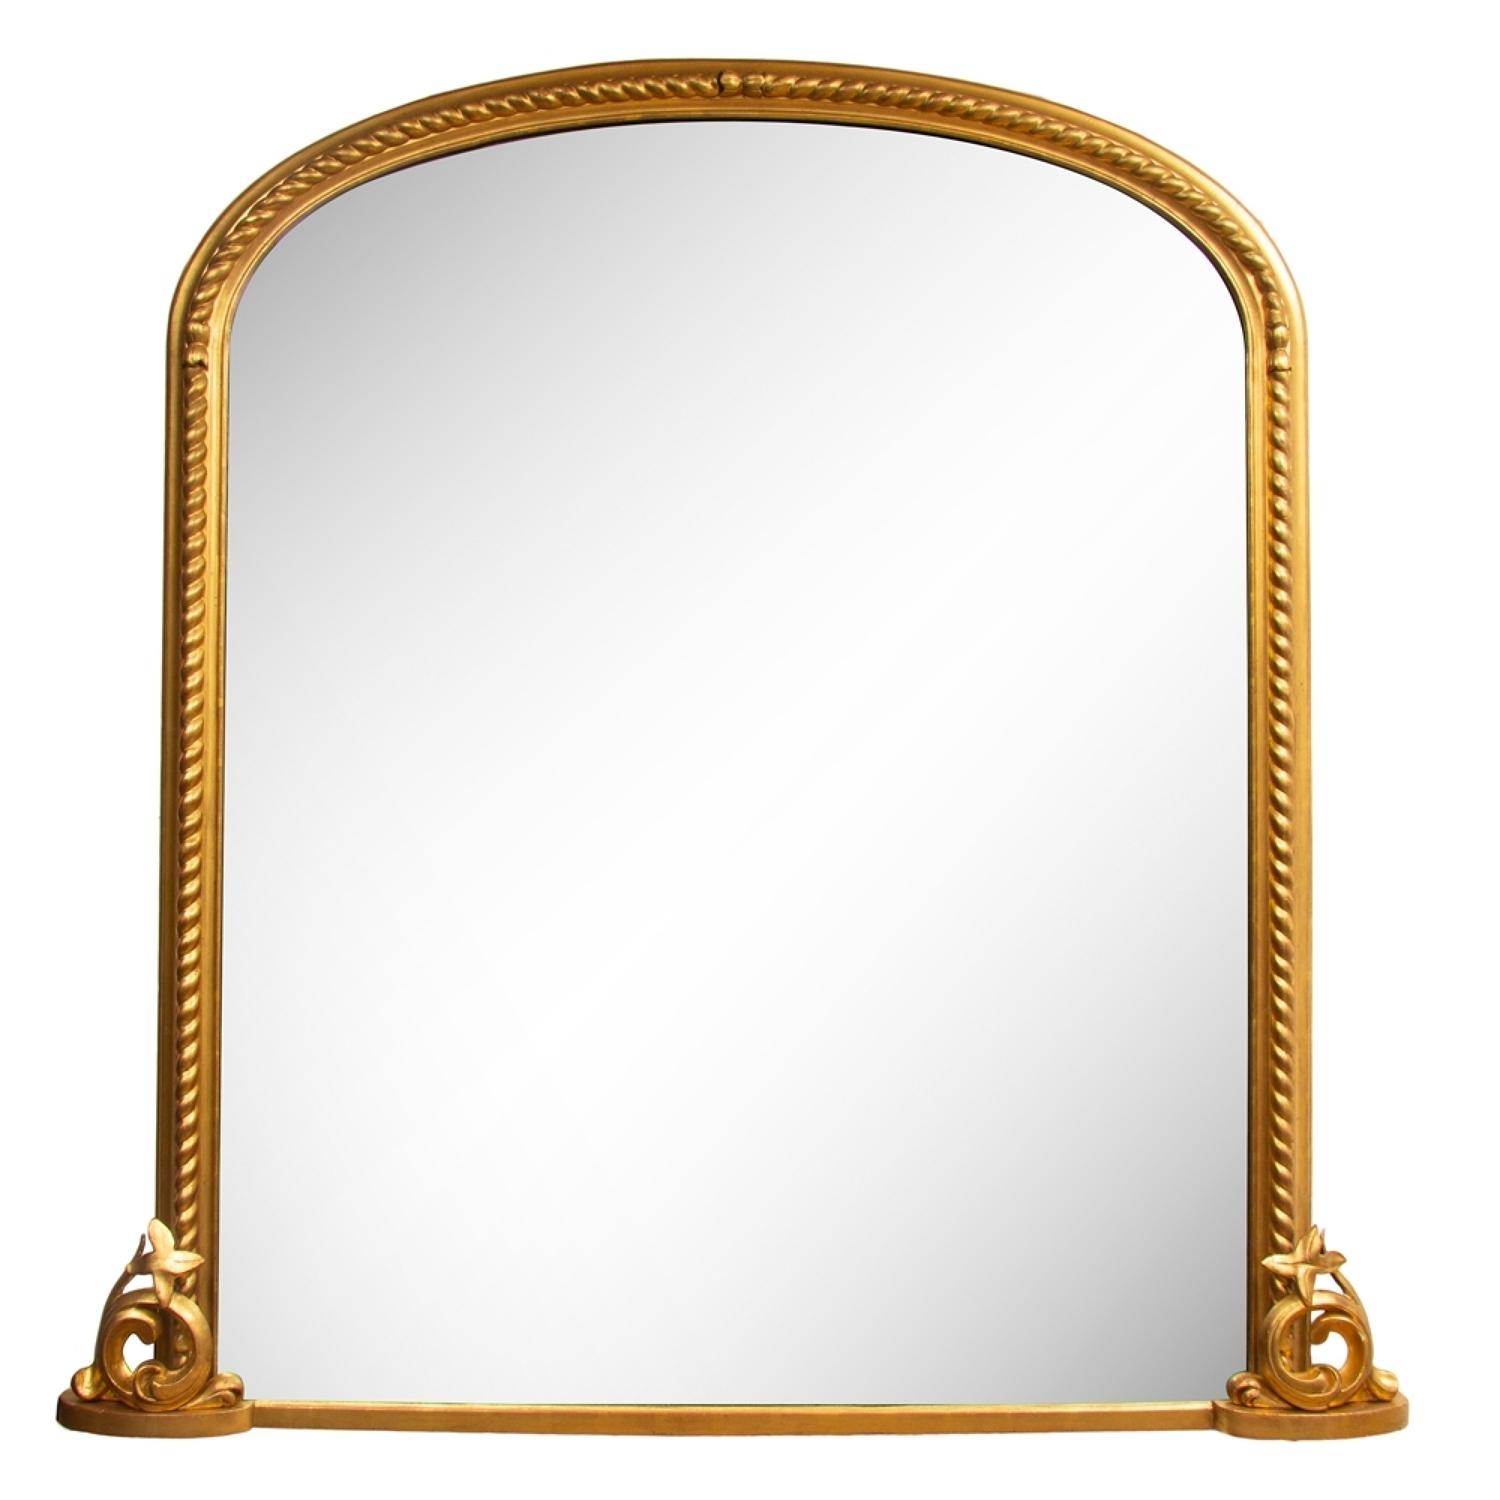 Superb large antique gilded overmantle mirror